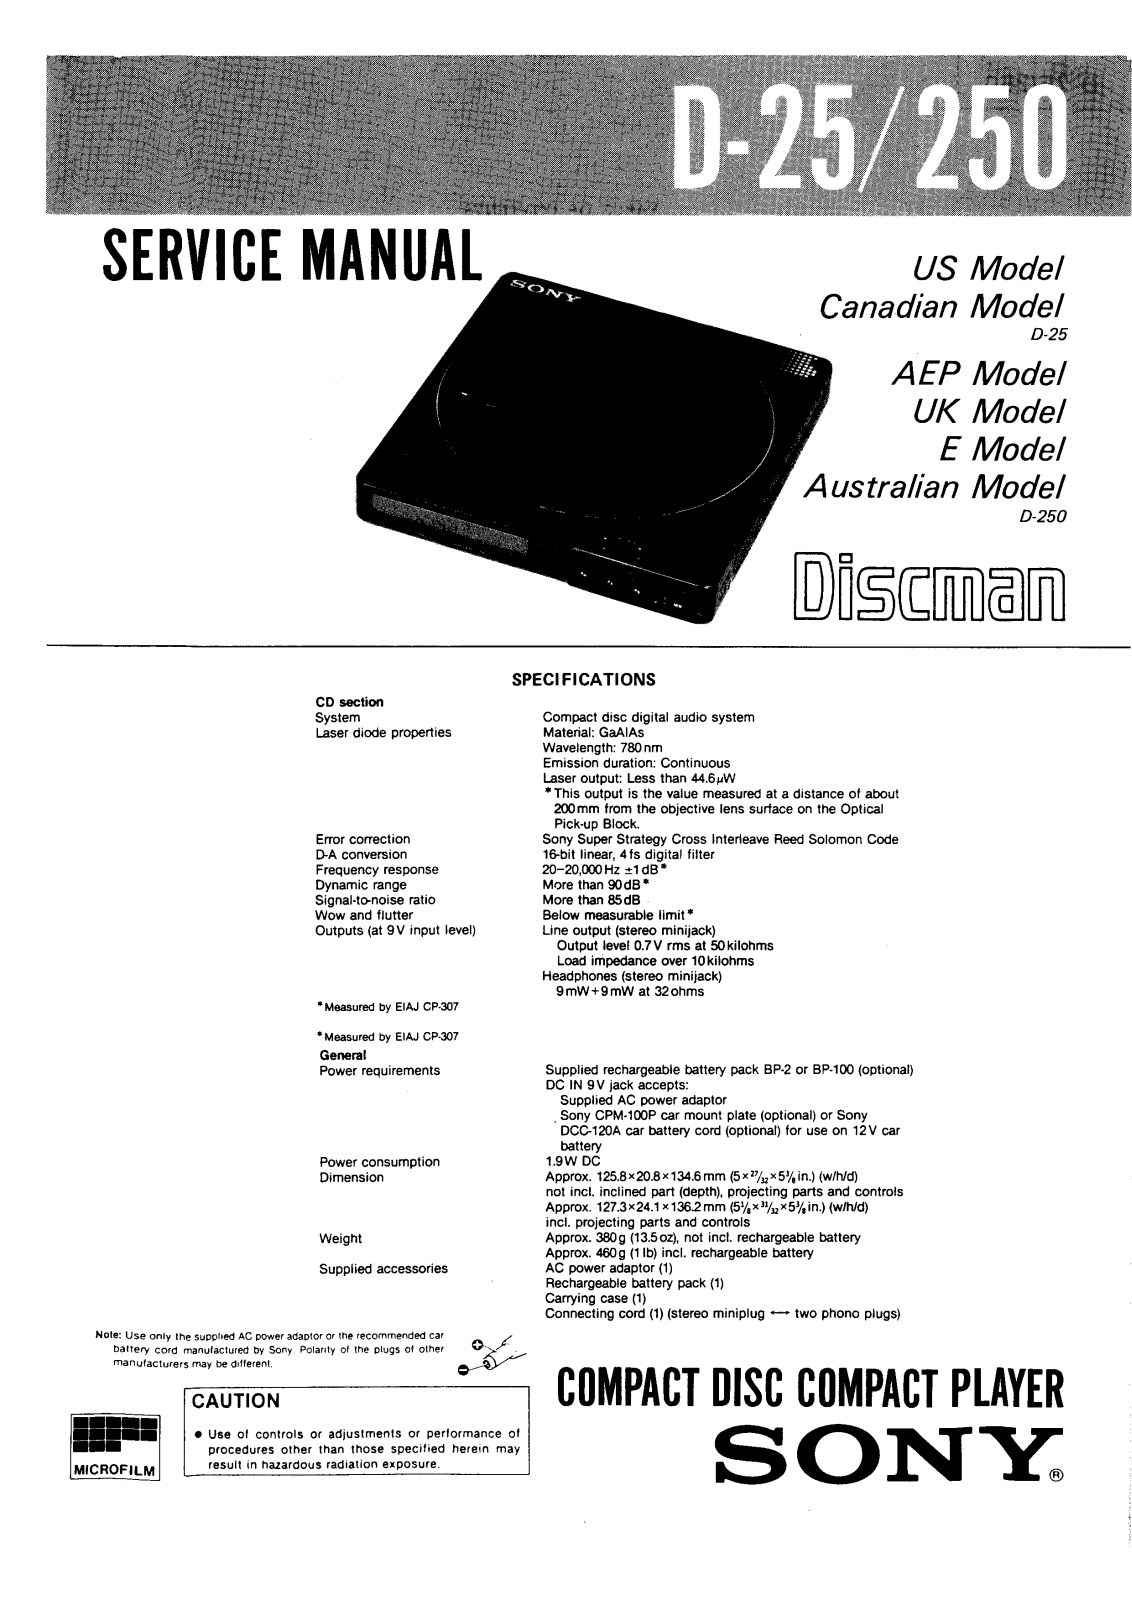 Sony D 25, D 250 Service Manual